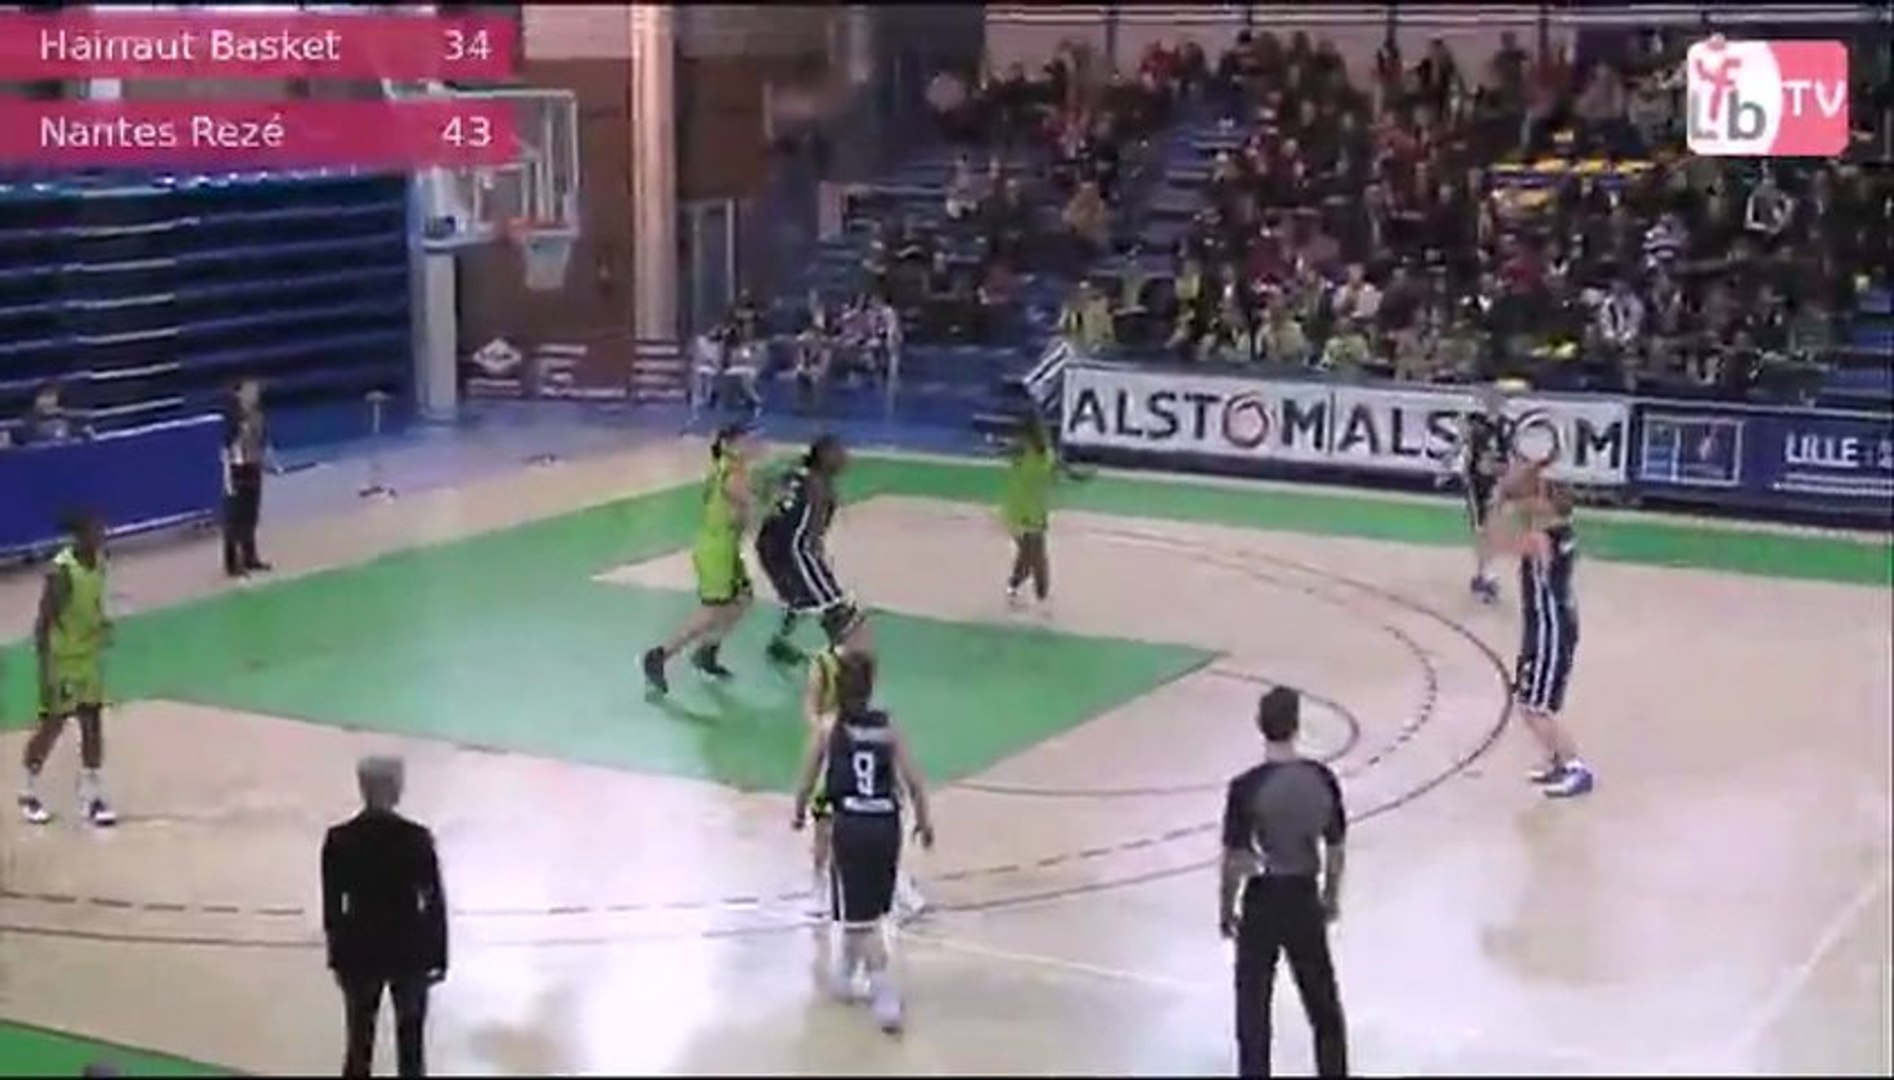 LFB TV - Journée 21 : Hainaut Basket - Nantes Rezé - Vidéo Dailymotion